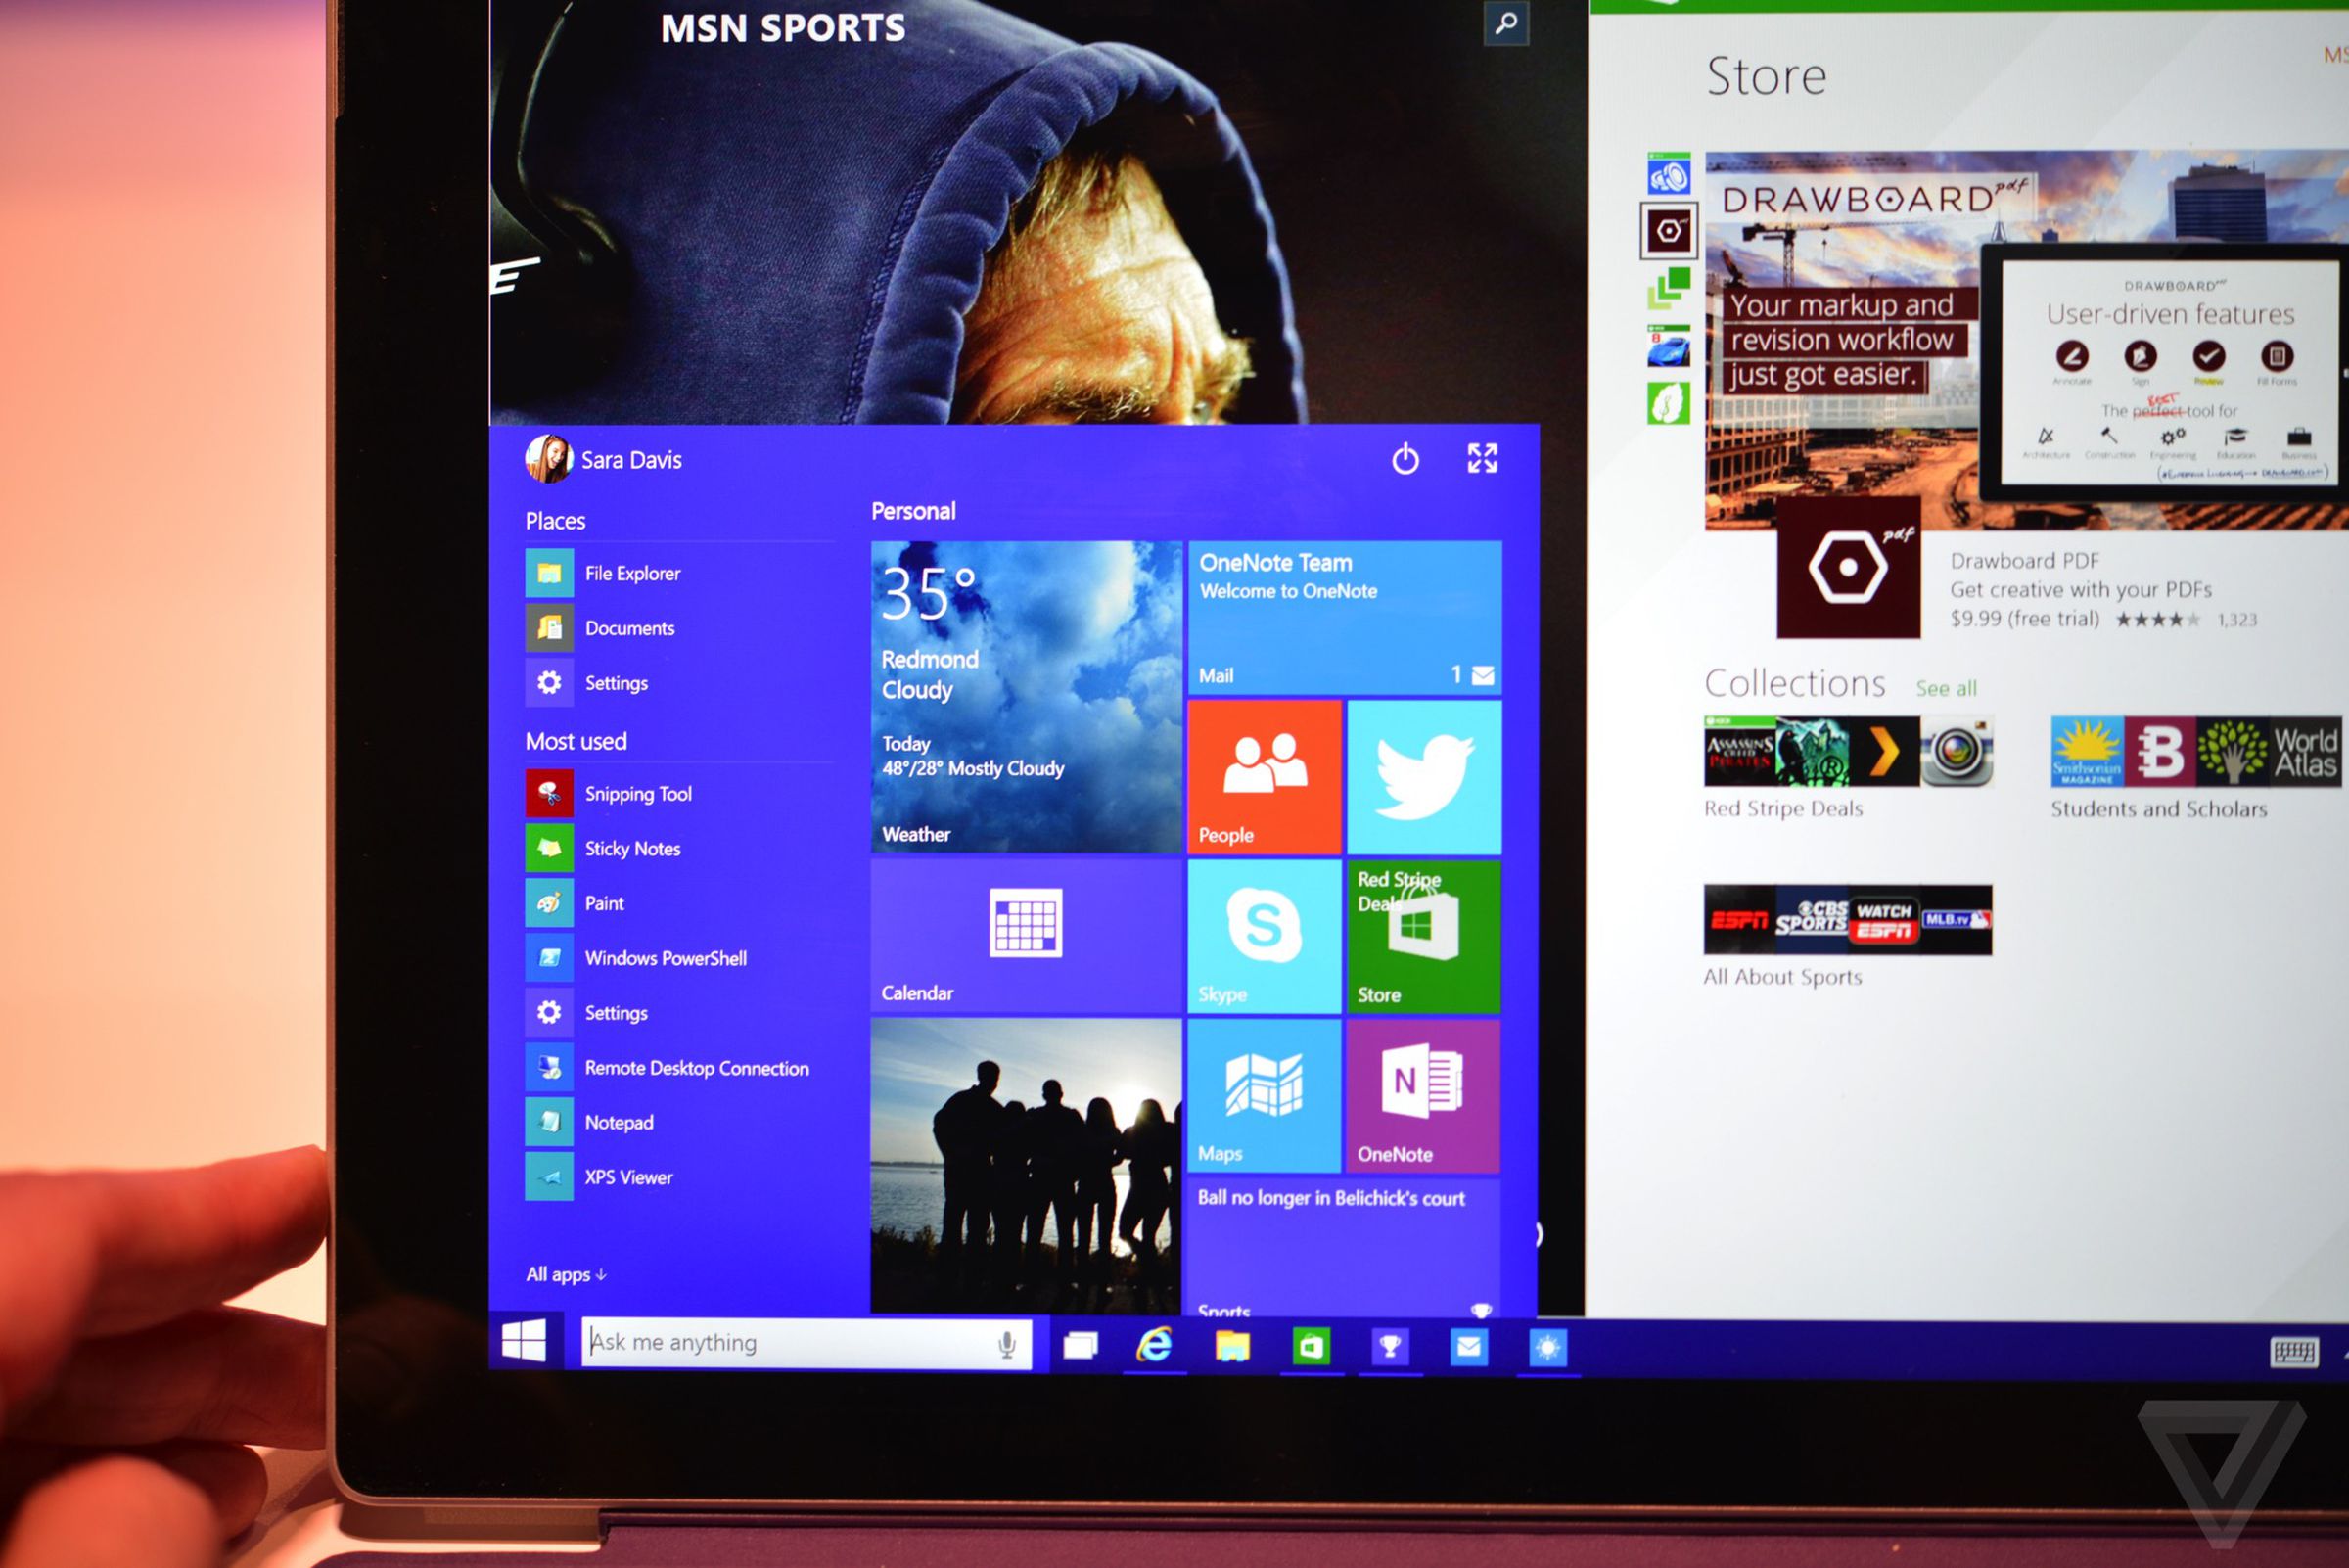 Windows 10 tablet hands on photos